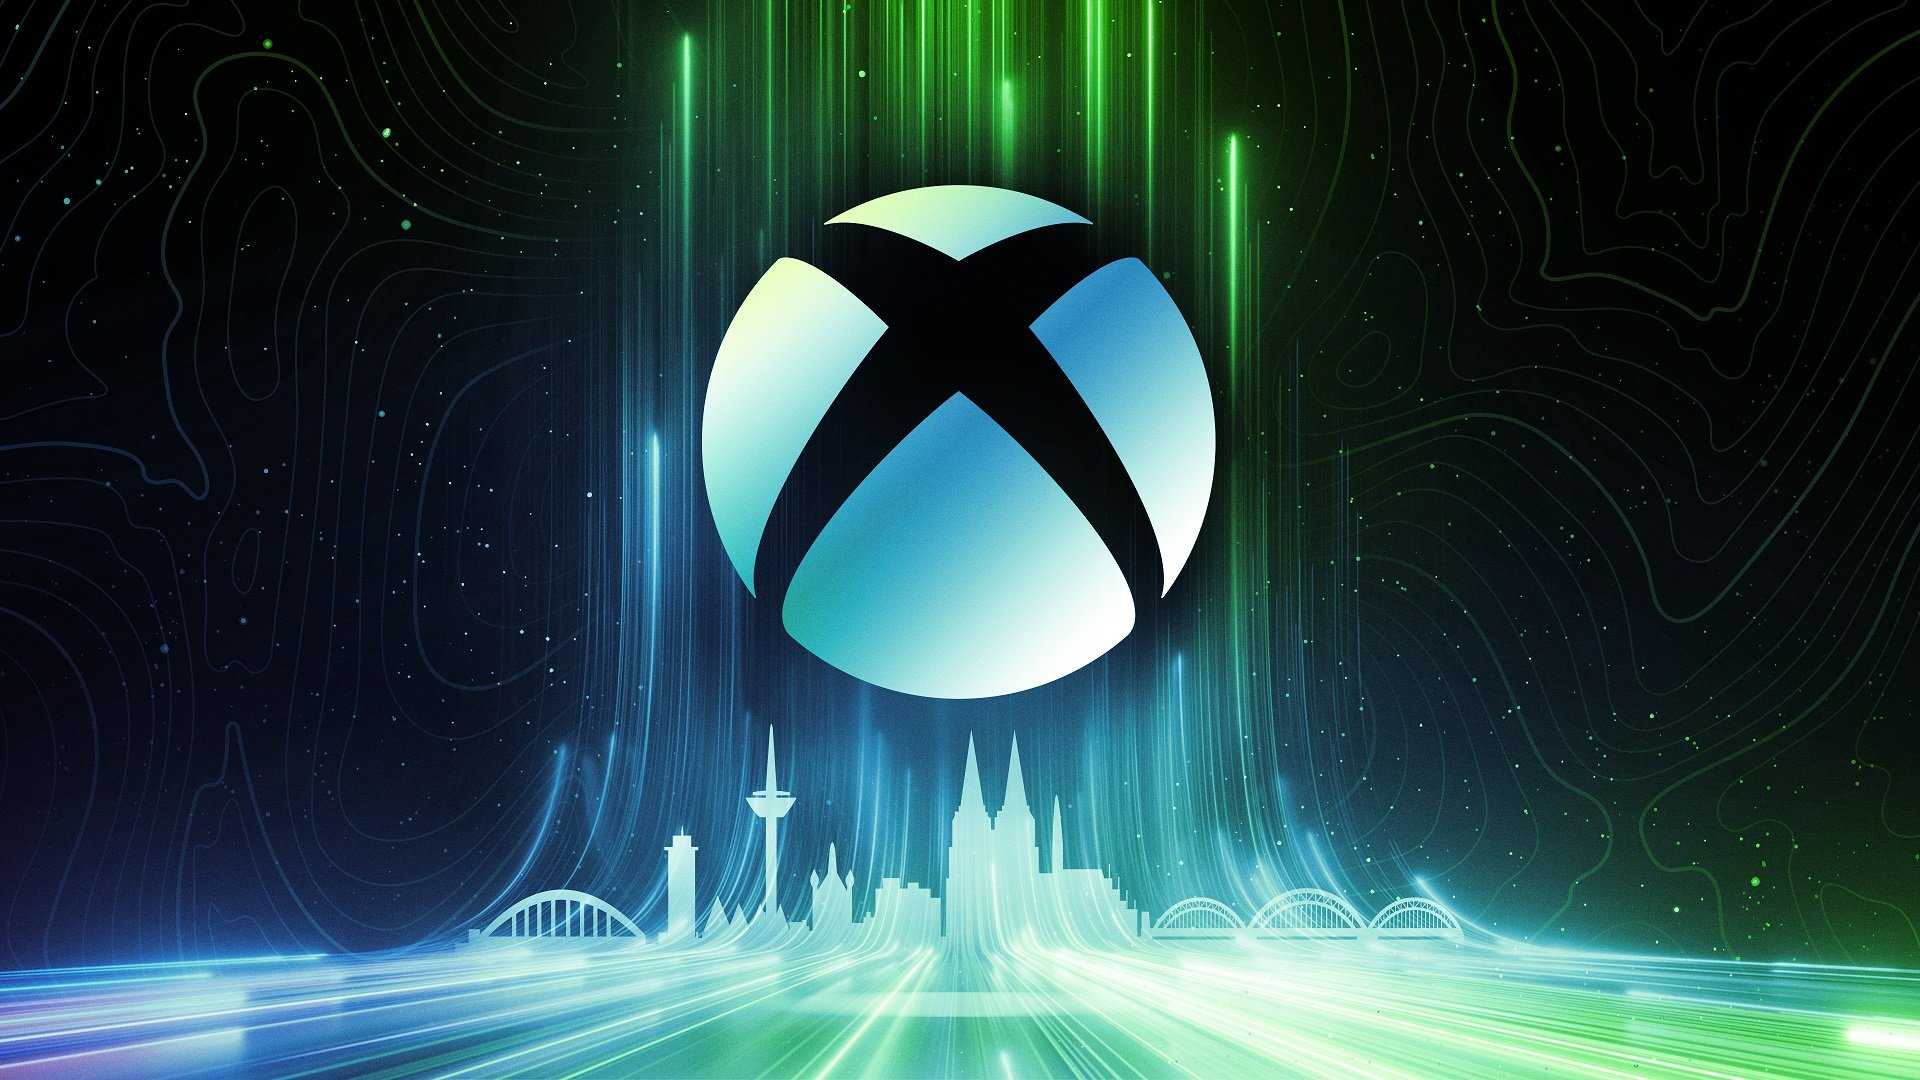 Xbox科隆展计划公开 现场可游玩《装甲核心6》《潜行者2》(科隆 xbox)